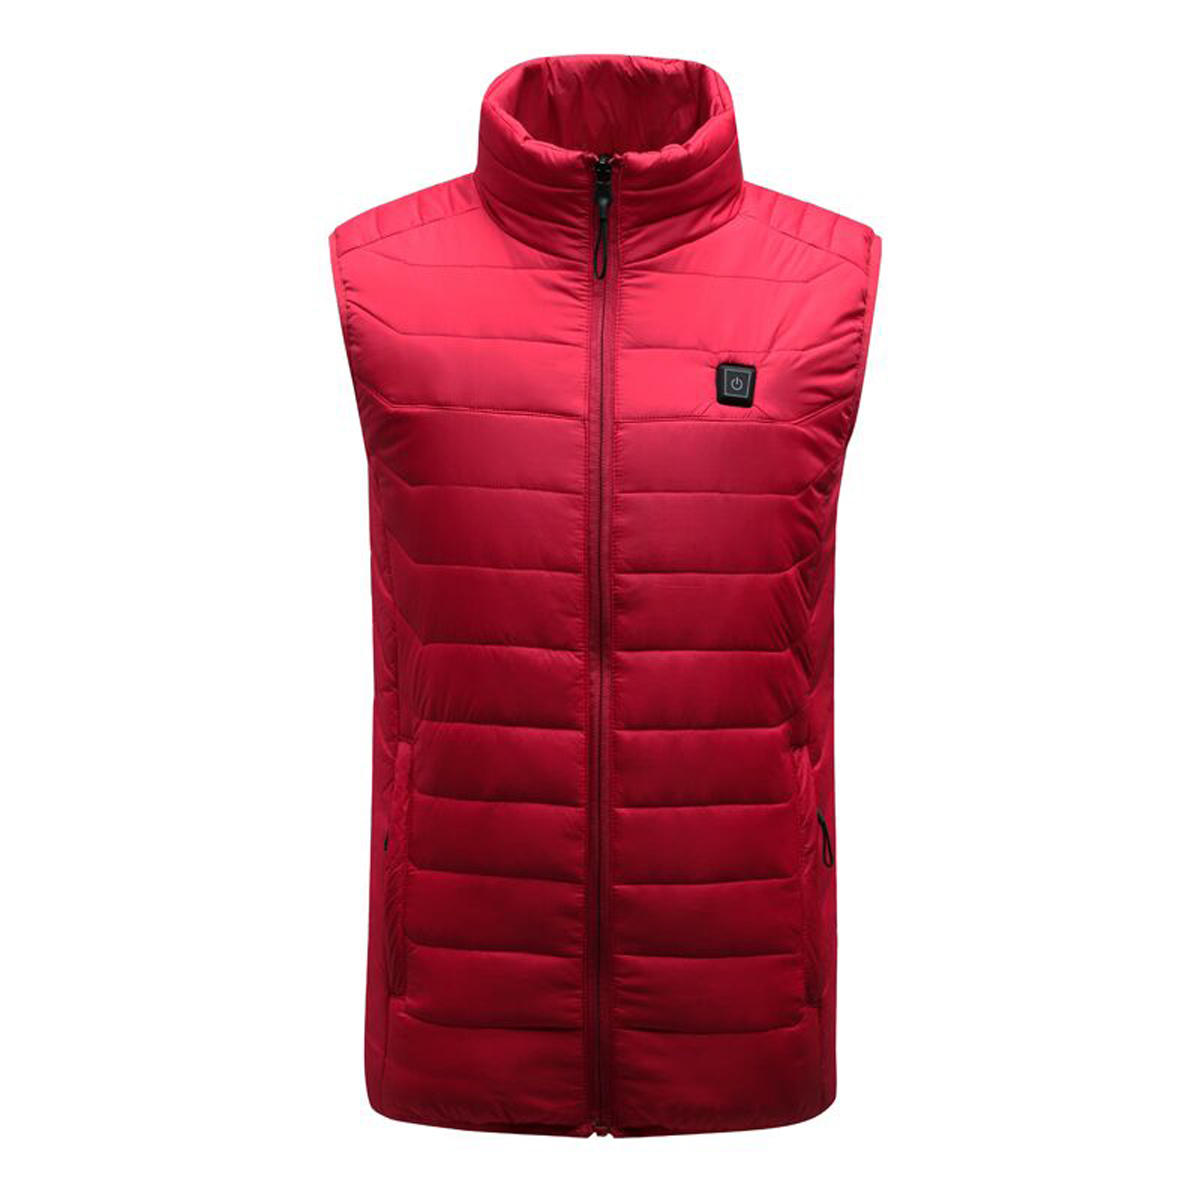 Image of Red Unisex USB Heating Vest Smart Winter Body Warmer Outdoor Racing Jacket Heater Xmas Gift